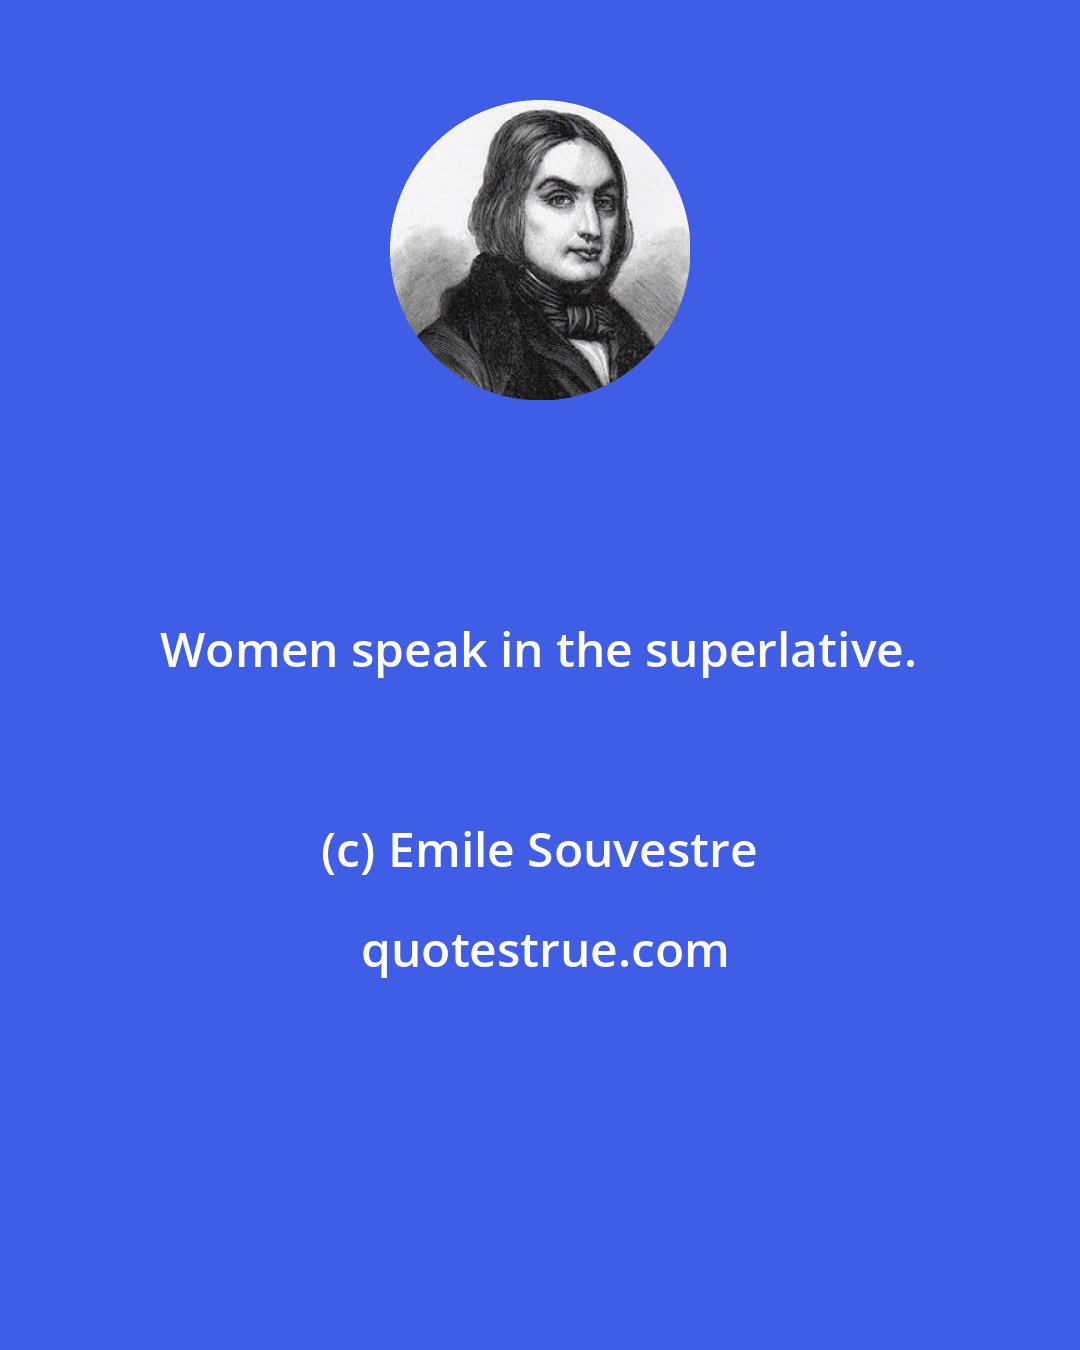 Emile Souvestre: Women speak in the superlative.